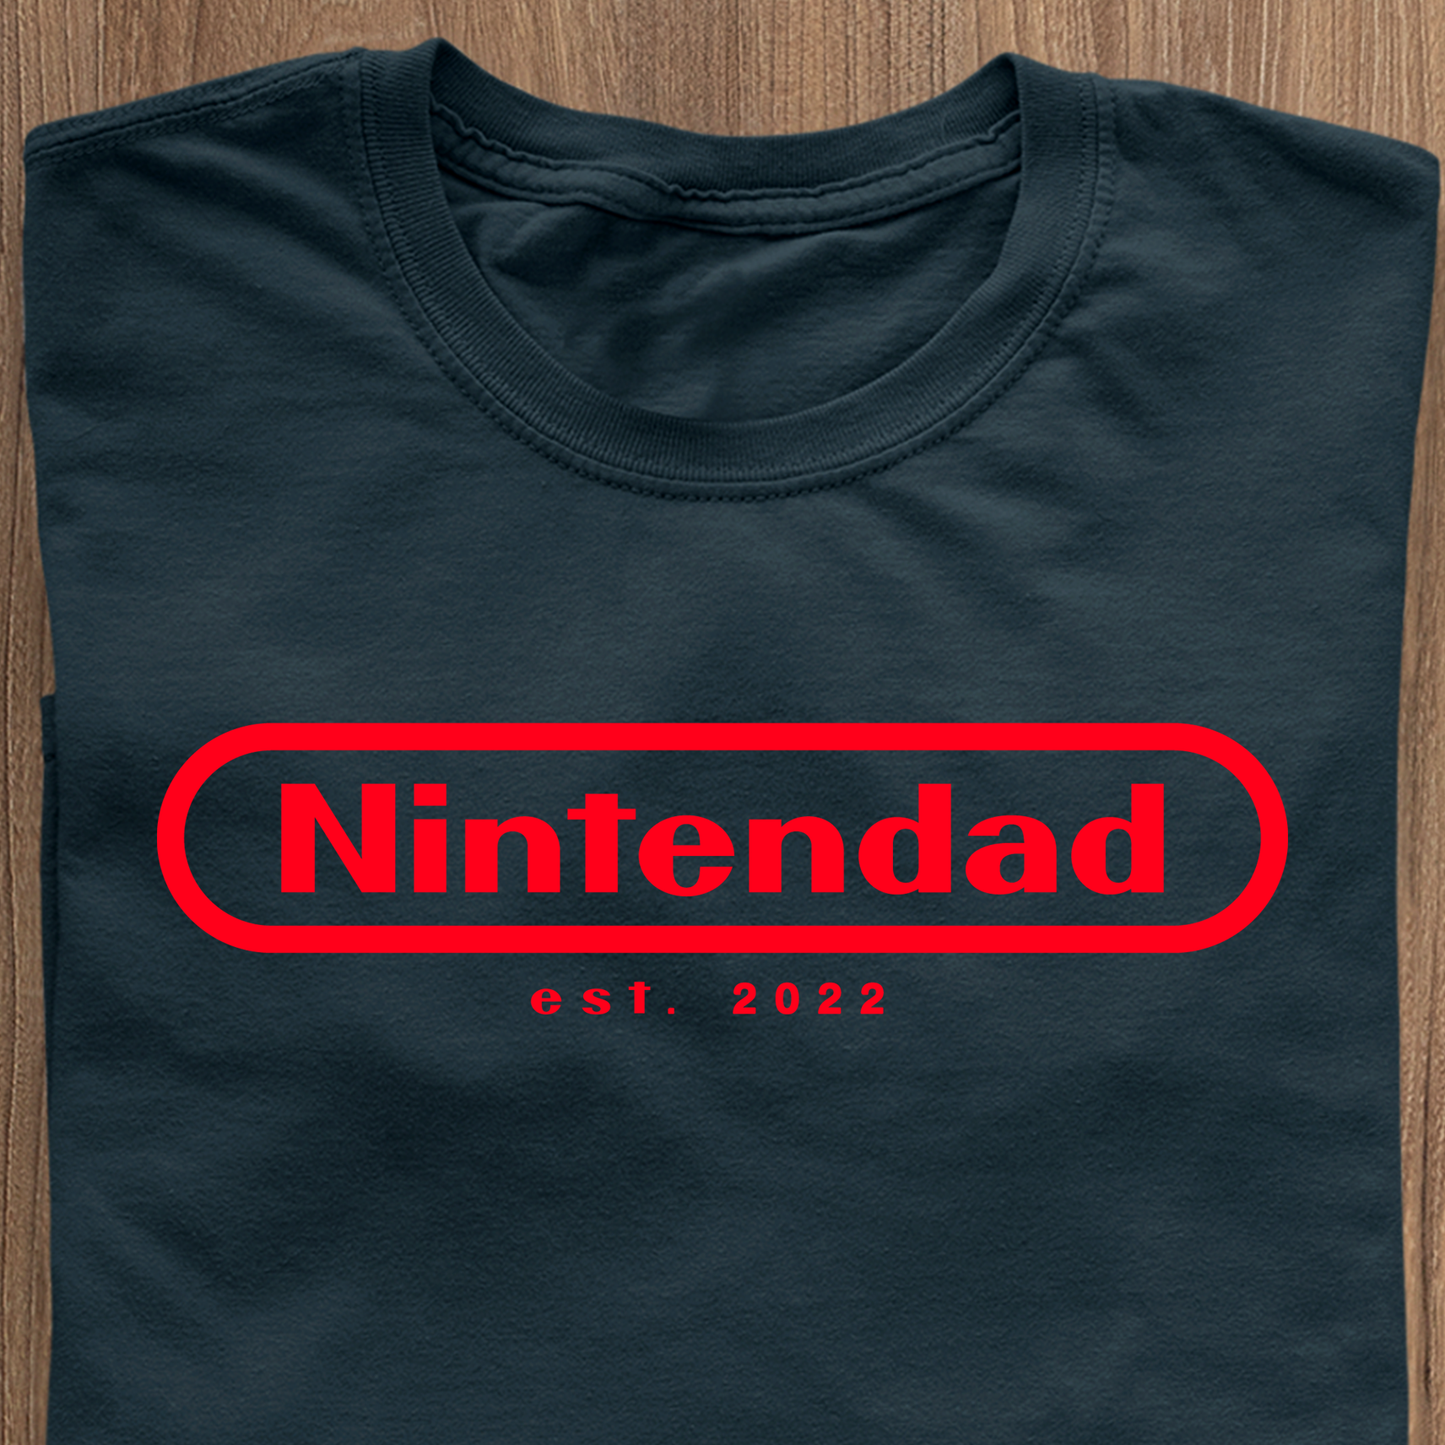 Nintendad T-Shirt - Date Customizable